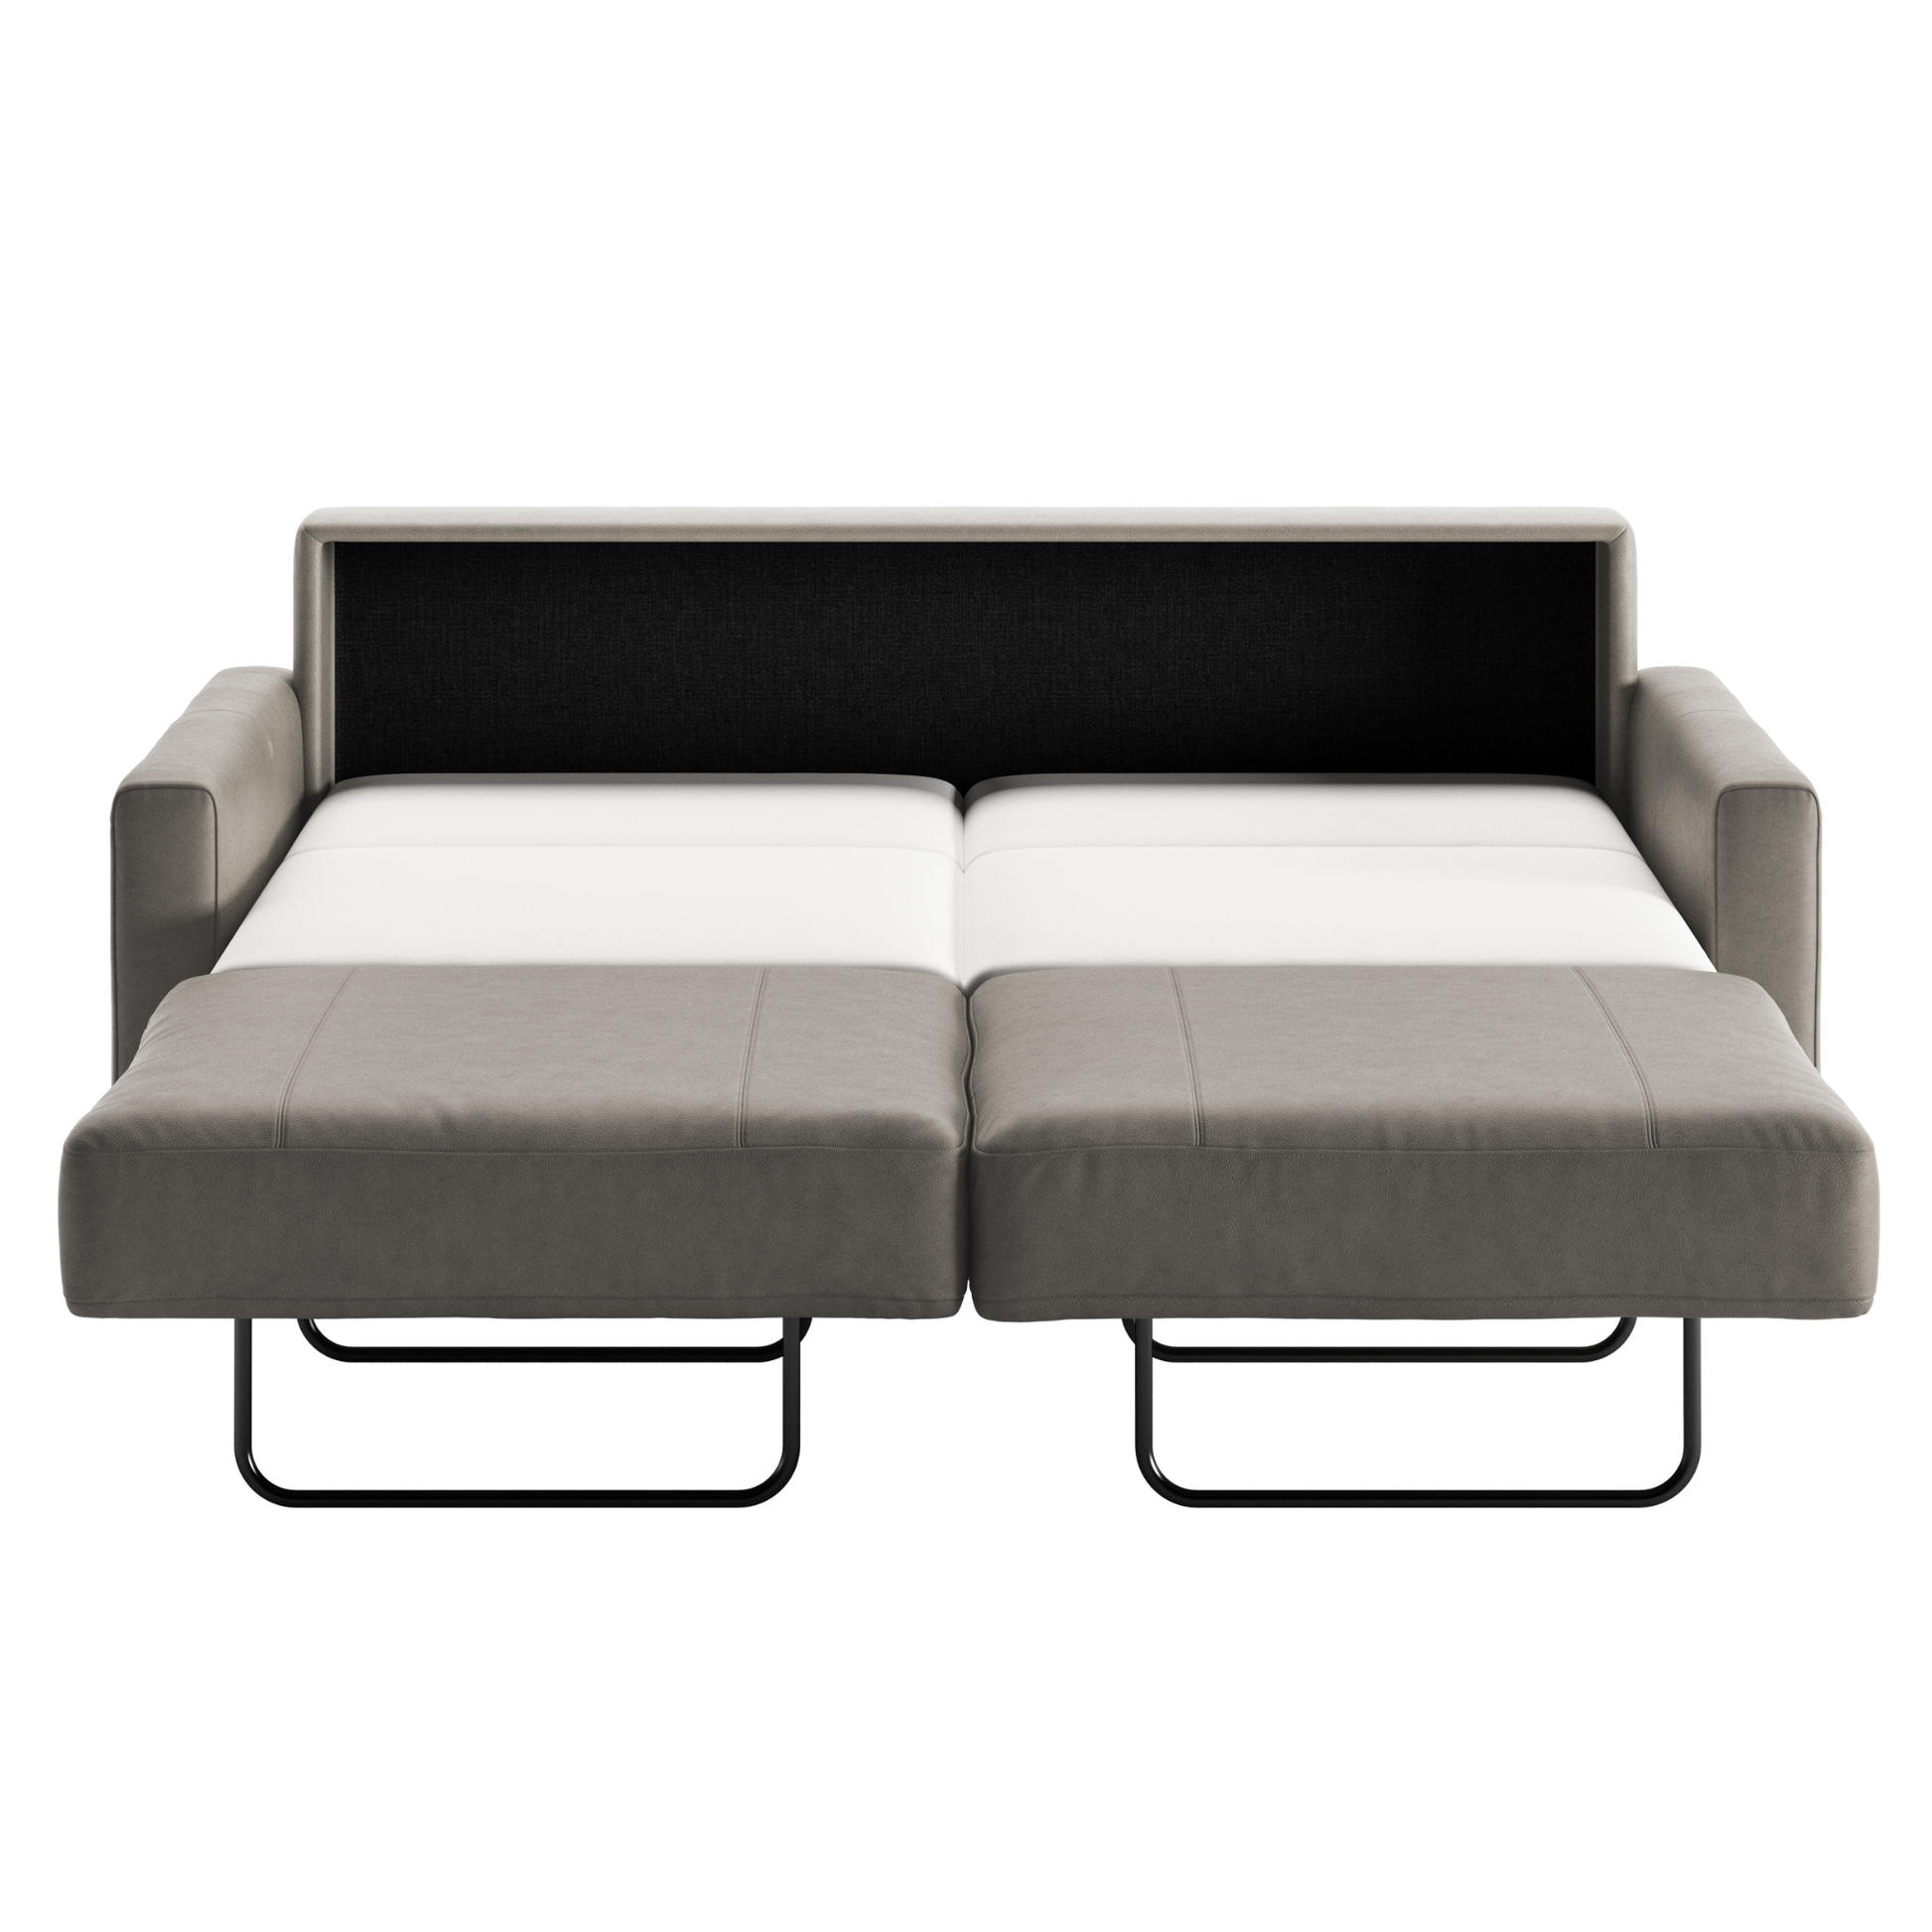 	Luonto Nico Queen Sleeper Sofa Quick Ship Program Soft Antique Leather 4340 (Grey) with Open Sleeper Sofa